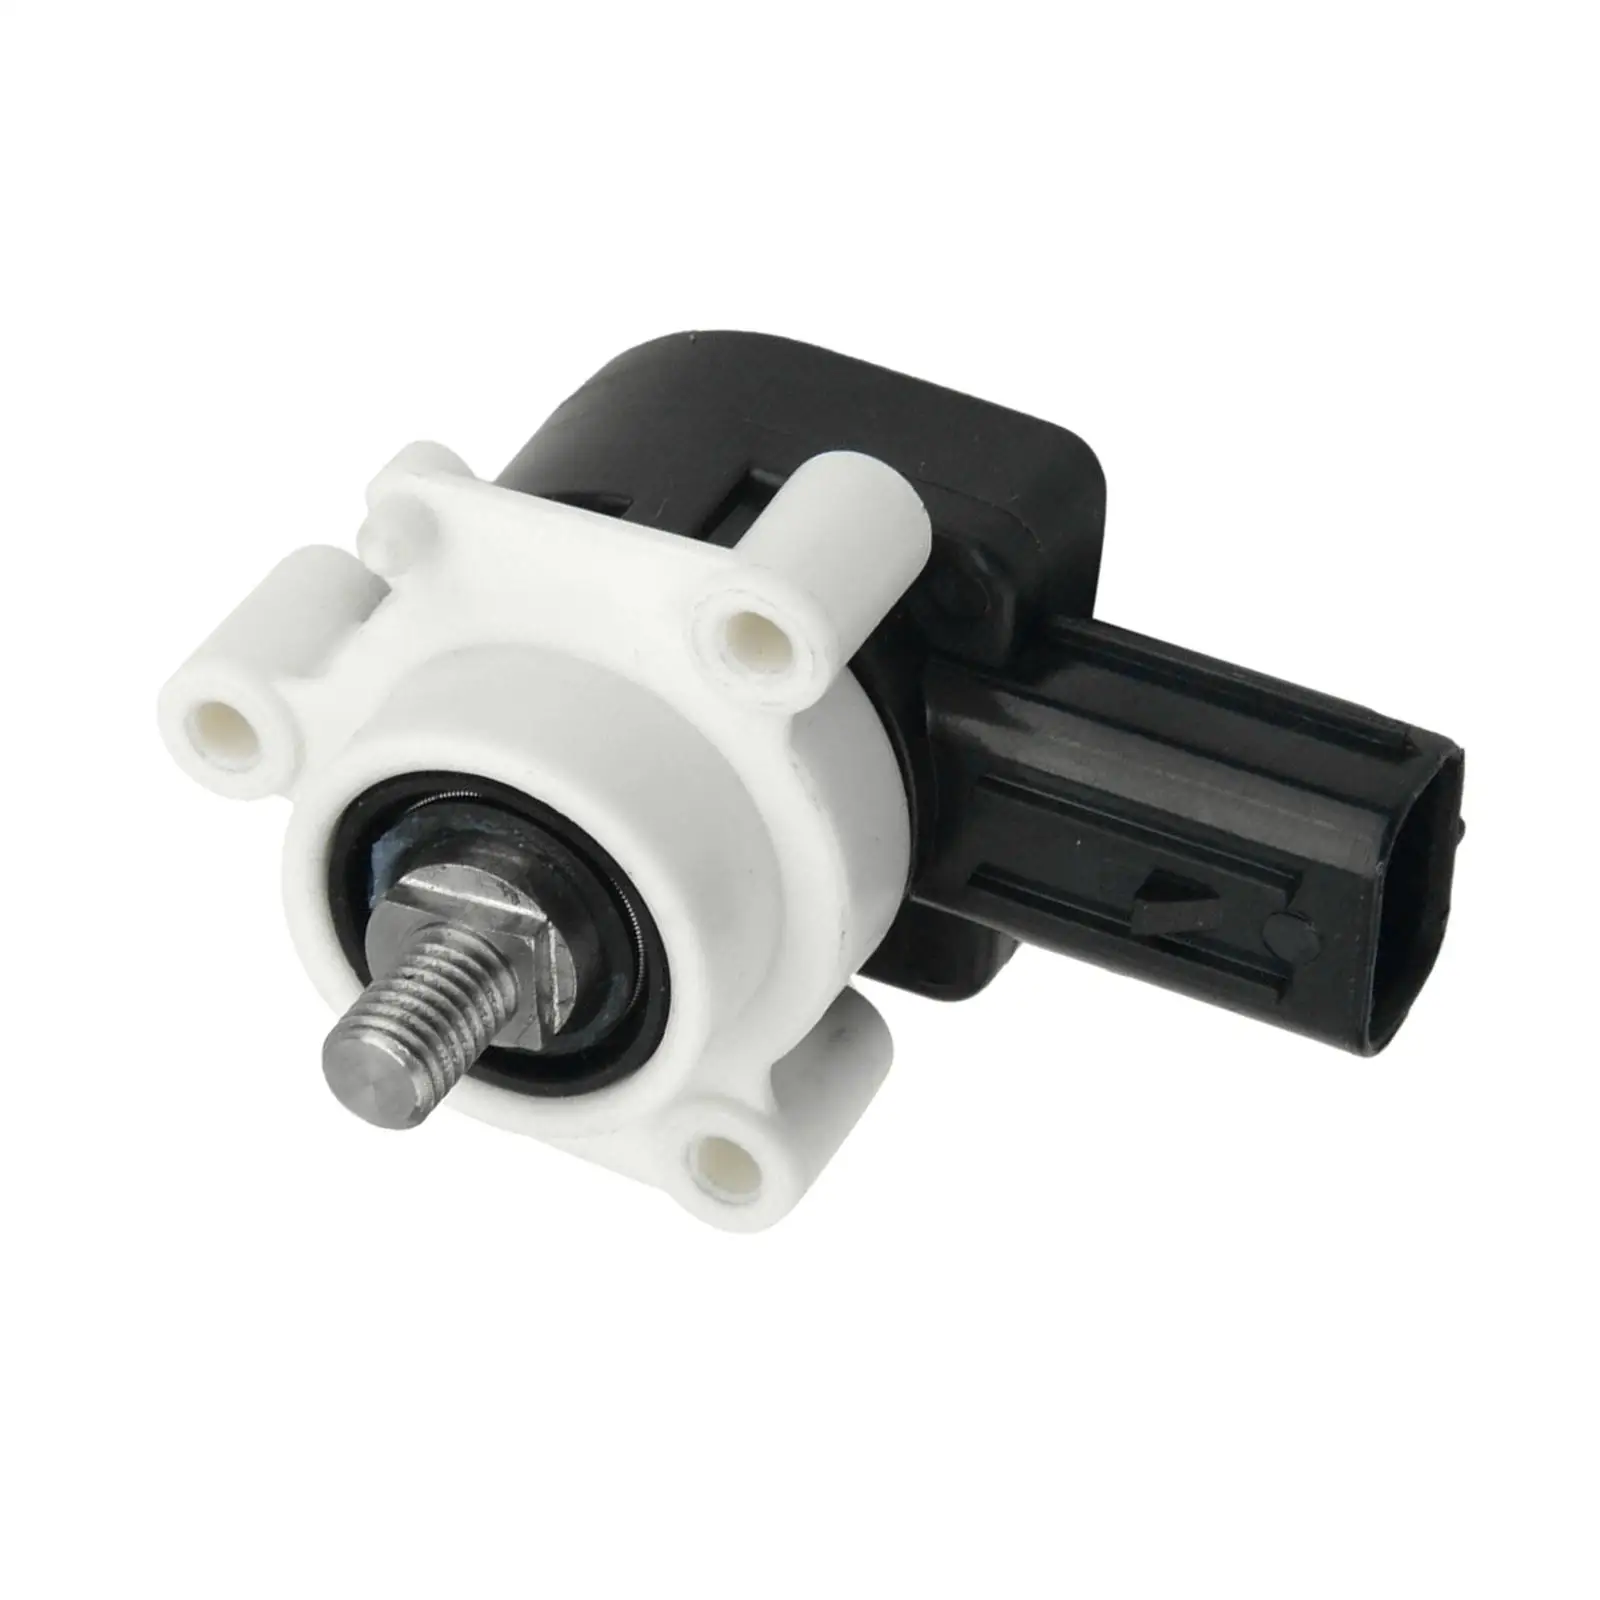 Headlight Level Sensor 89408-34010 for Toyota Avalon for camry Accessory